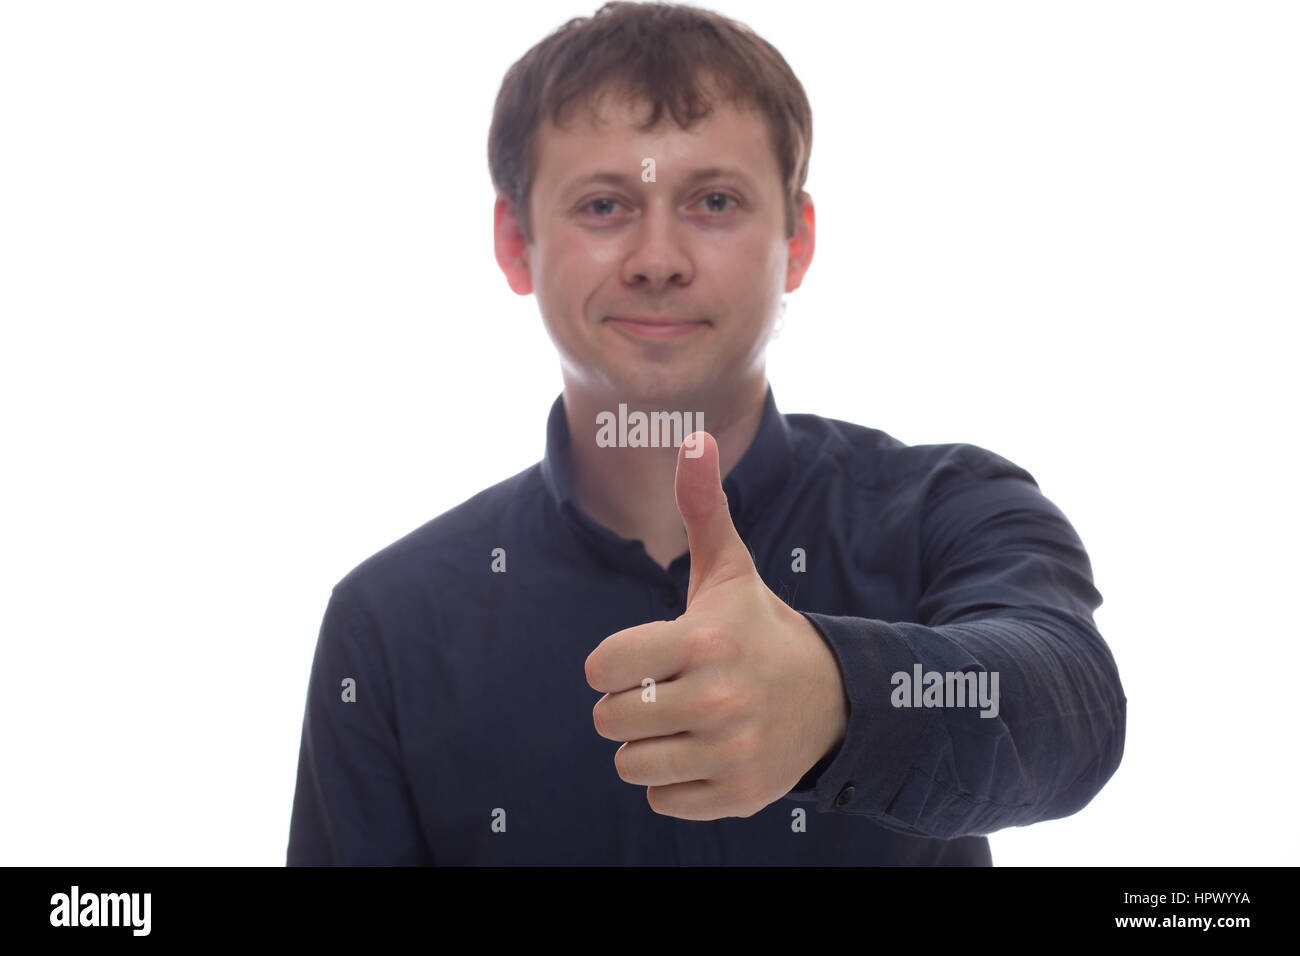 Man showing ok sign isolated on white background Stock Photo